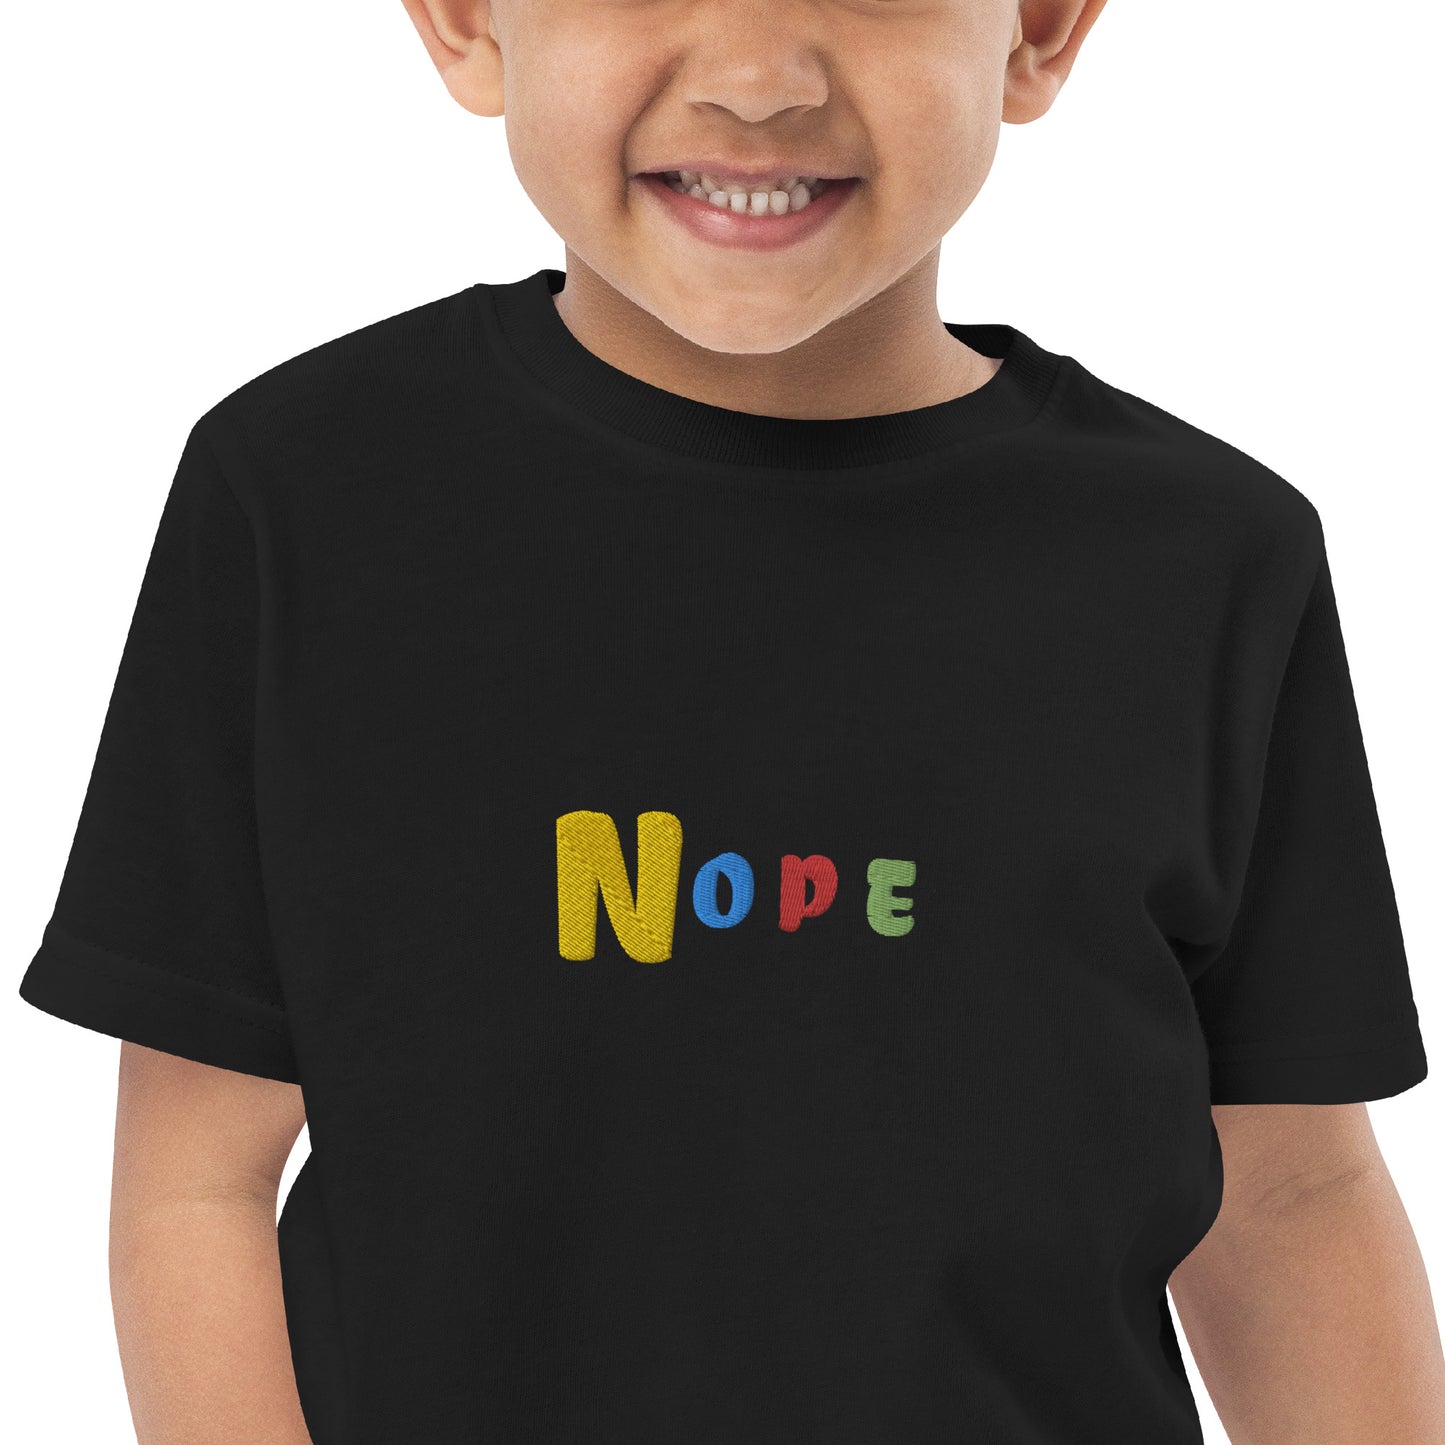 Nope Toddler jersey t-shirt